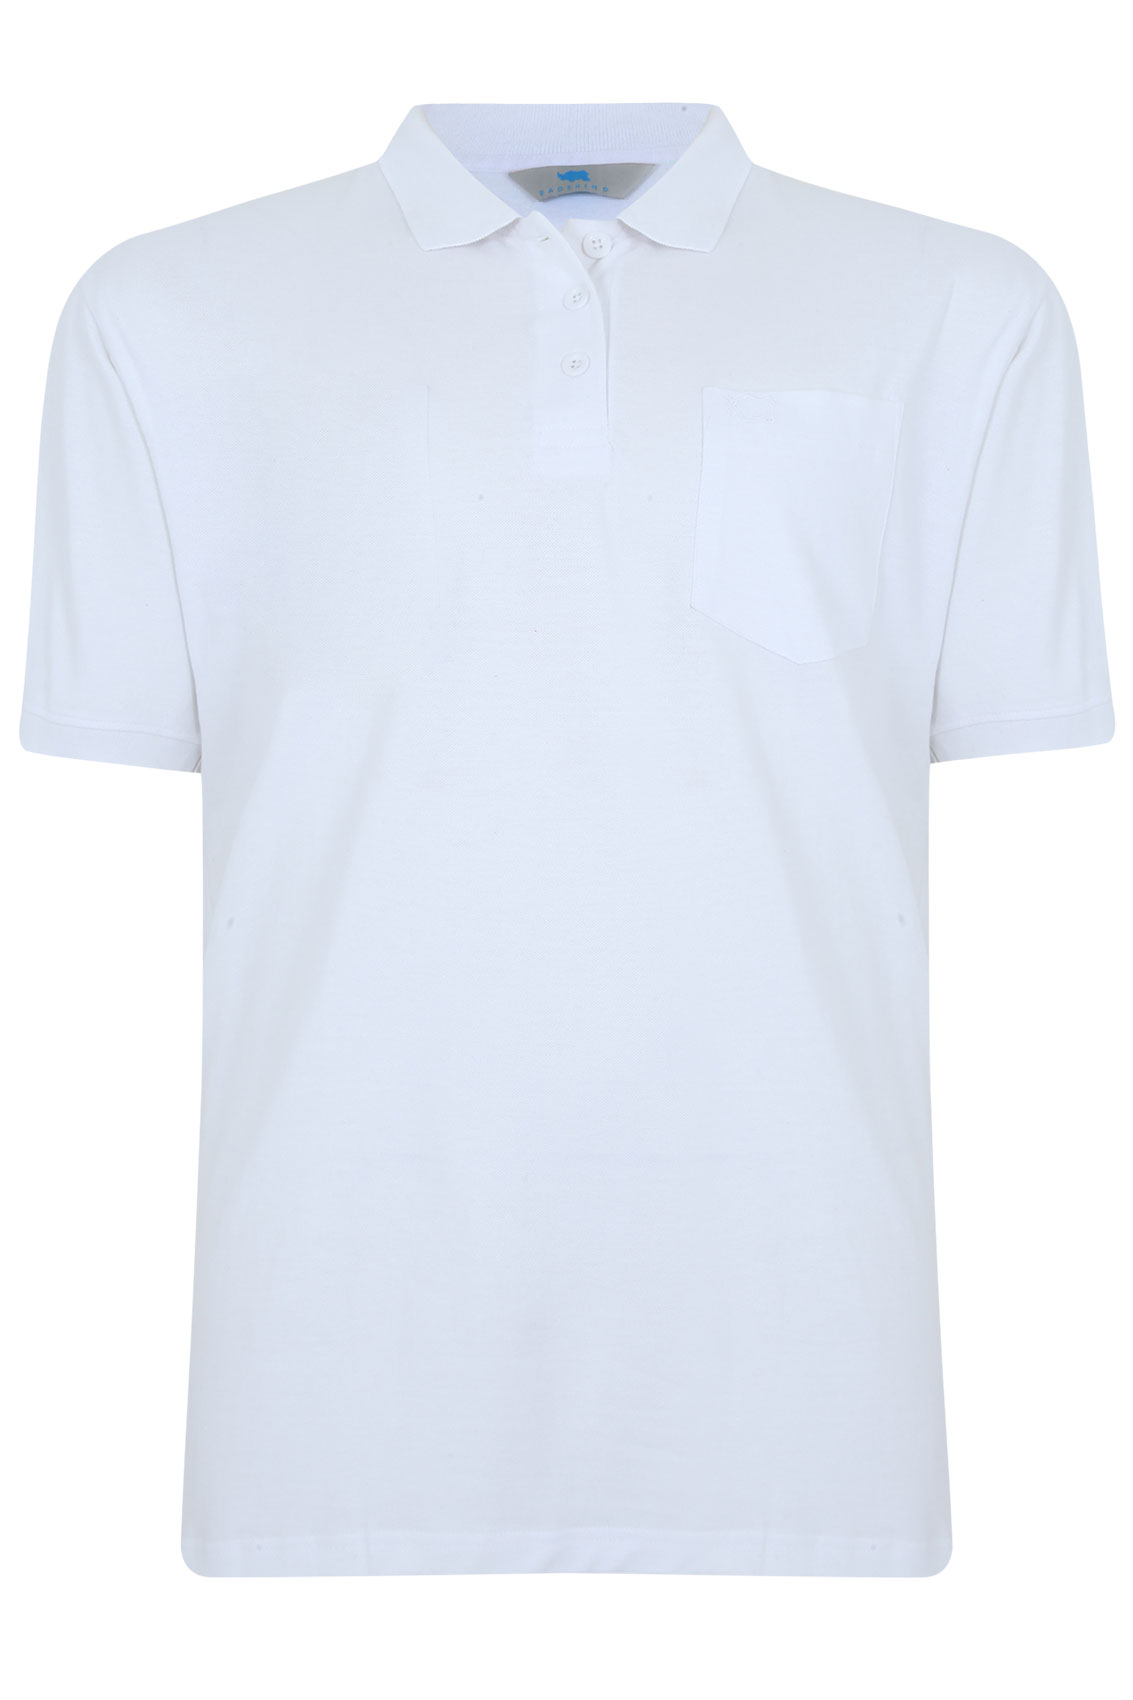 BadRhino White Plain Polo Shirt Extra large sizes M,L,XL,2XL,3XL,4XL ...